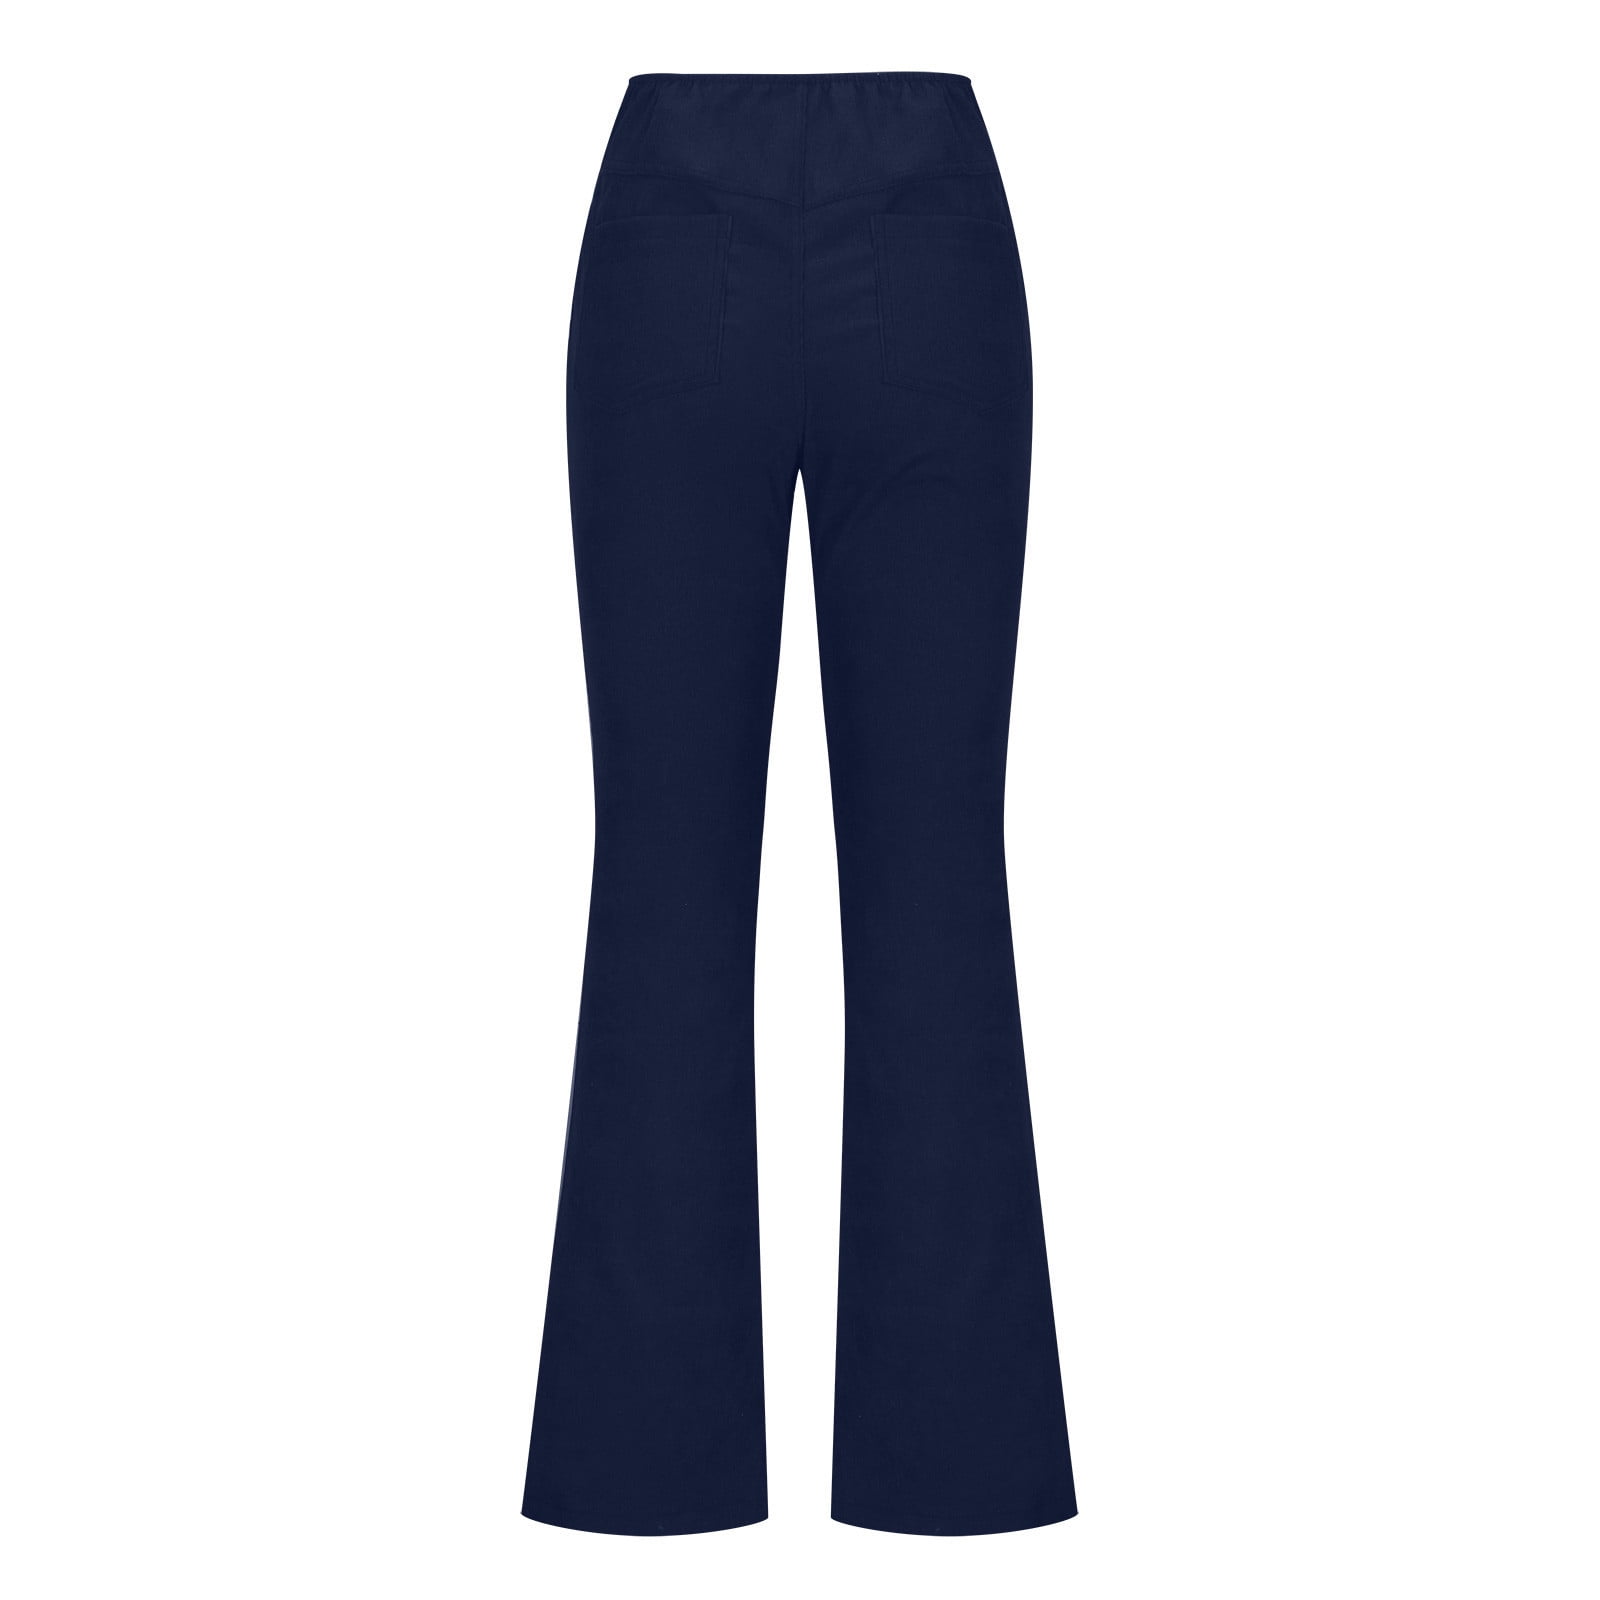 Corduroy Pants - Flare Pants - Navy Blue Pants - $78.00 - Lulus